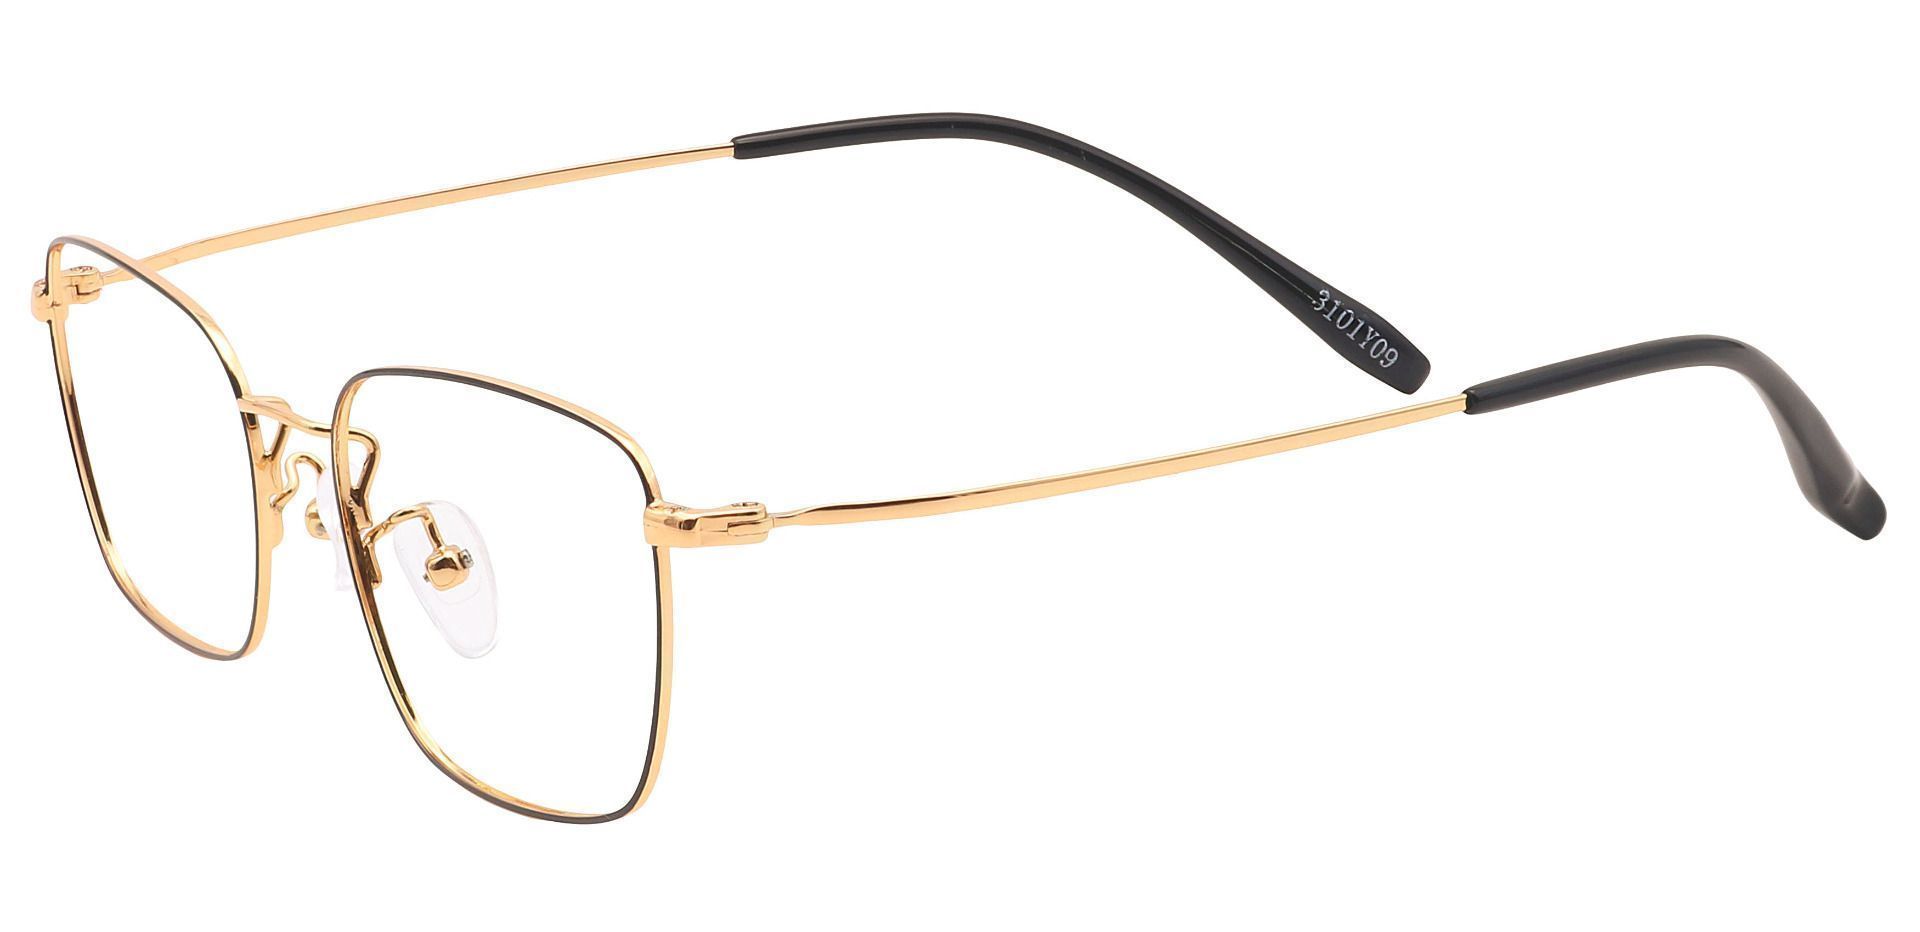 Clare Rectangle Eyeglasses Frame - Yellow